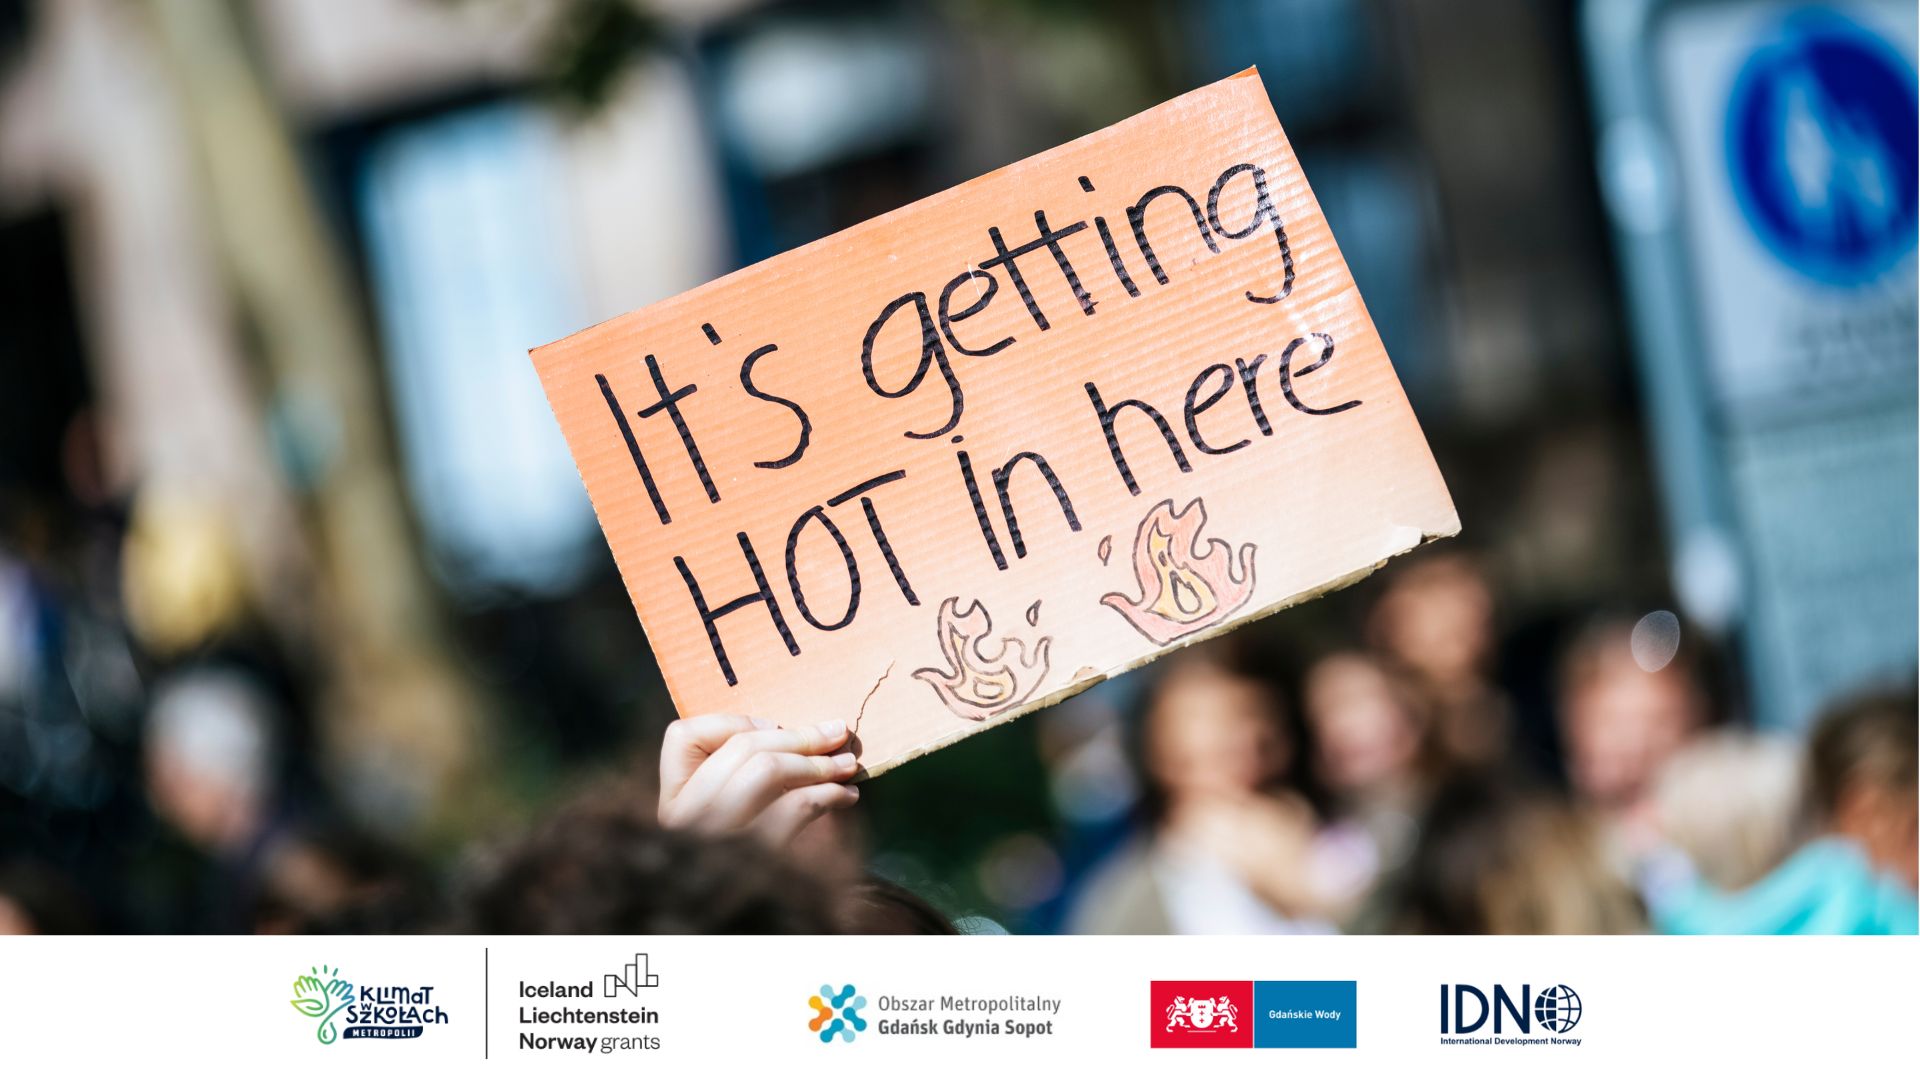 Na zdjęciu transparent z napisem "It`s getting hot in here"